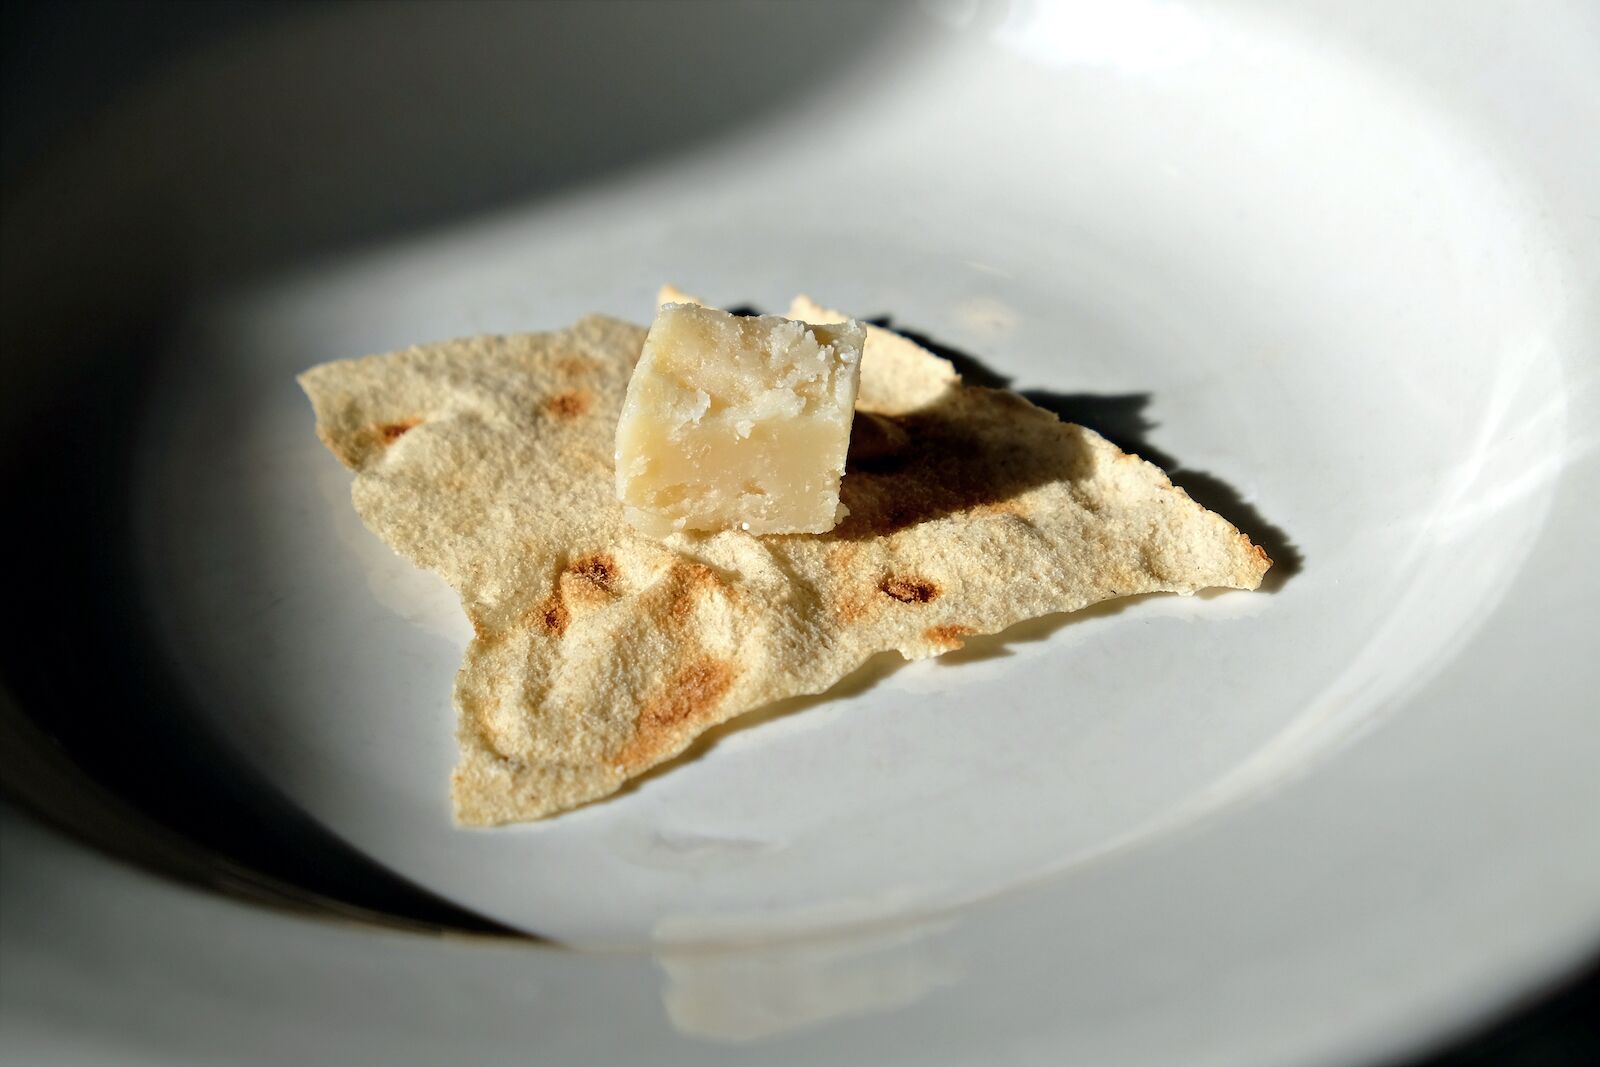 small cube of "Casu marzu", a typical sardinian cheese on a sheet of "Pane carasau", a thin crisp sardinian bread